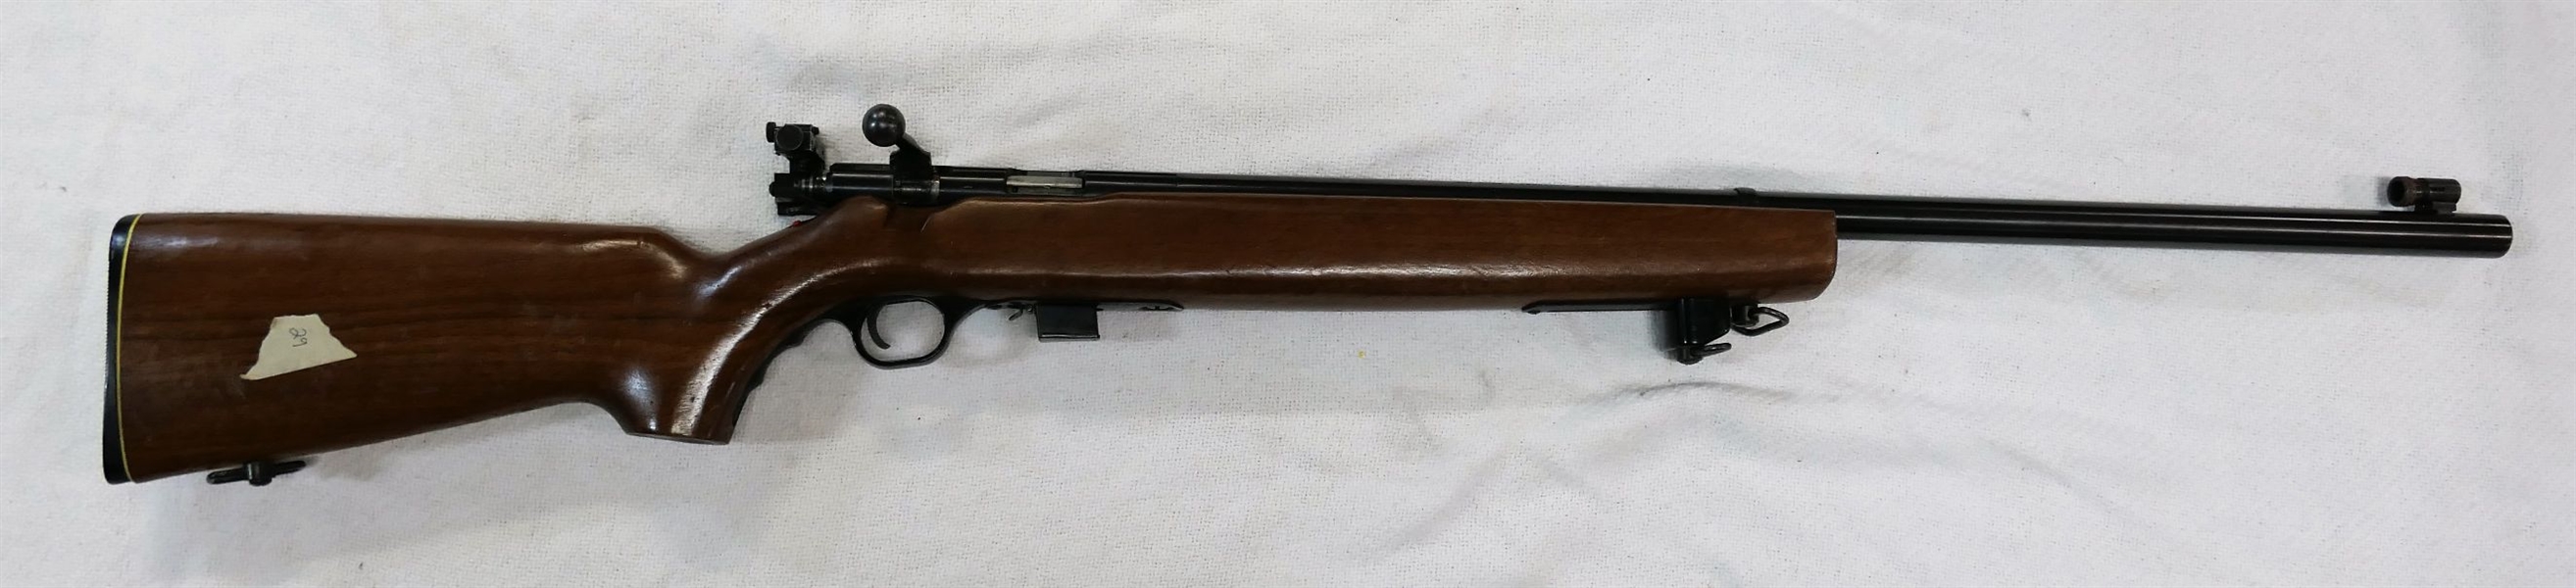 Mossberg Model 144LSB .22 Caliber Bolt Action Rifle - Ac- Kro - Gruv Barrel 